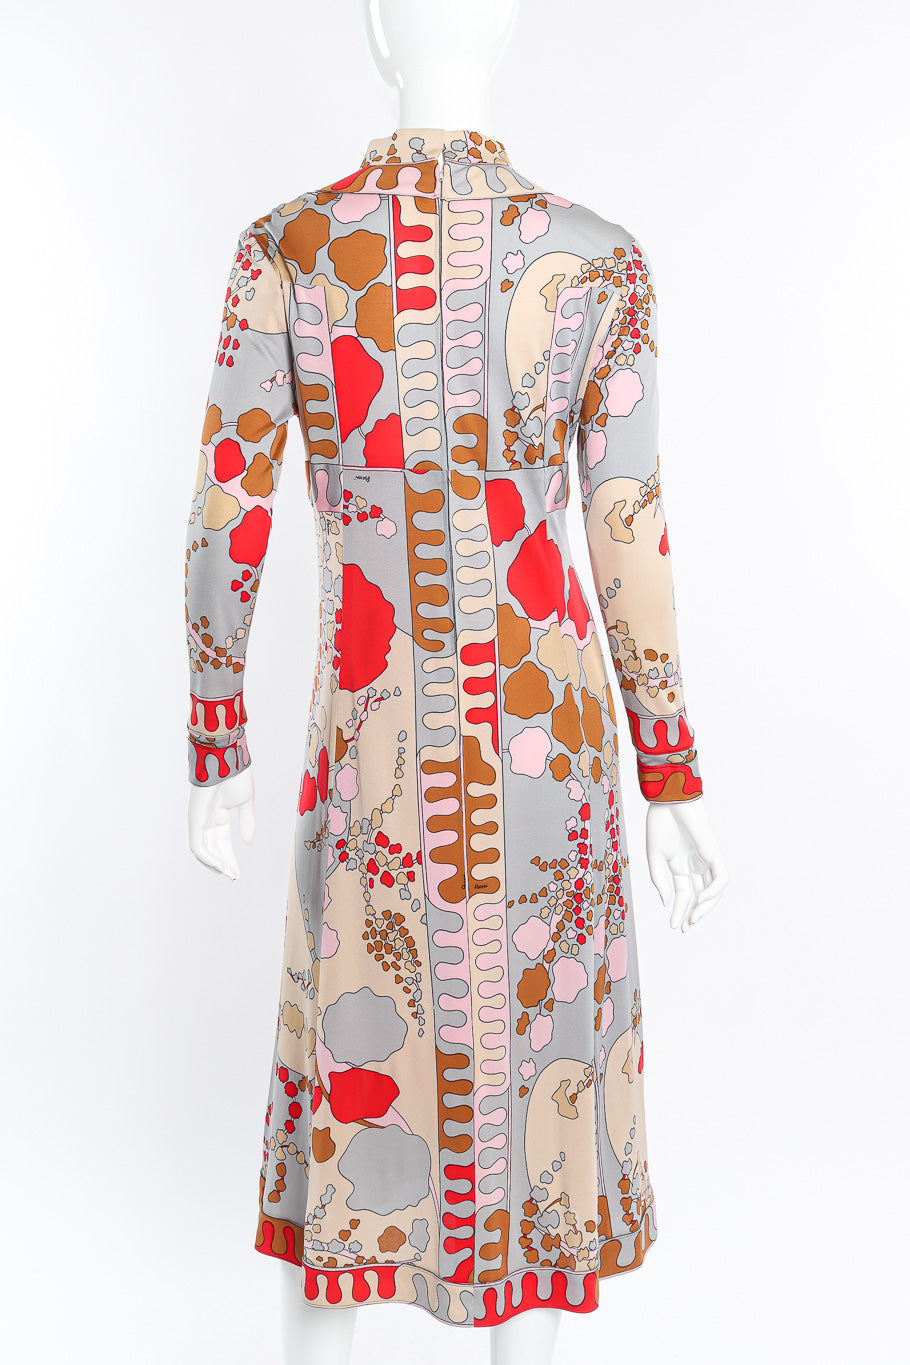 Vintage Averardo Bessi Psychedelic Print Silk Dress back view on mannequin @Recessla